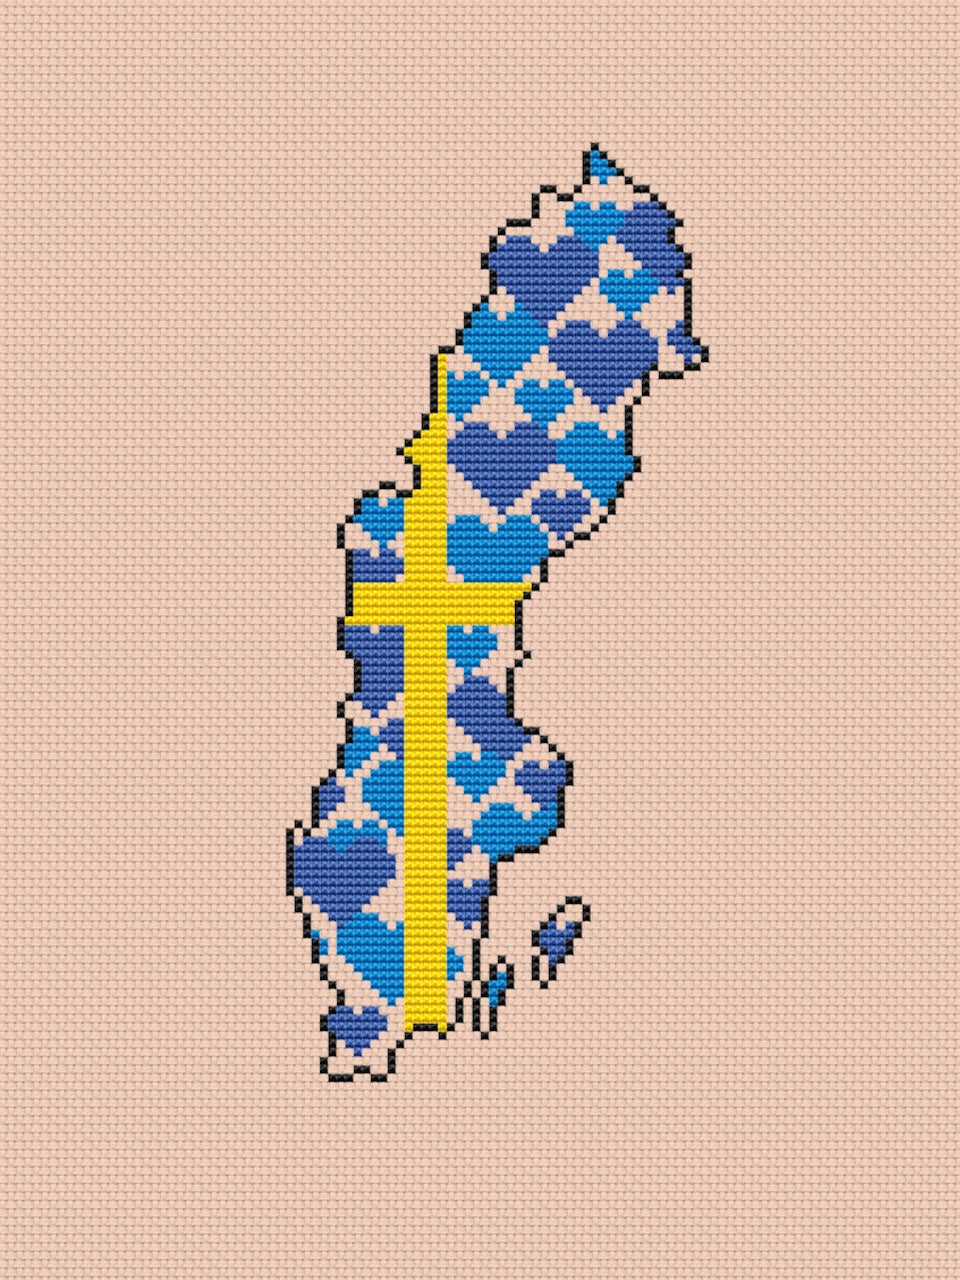 Sweden free flag cross stitch pattern